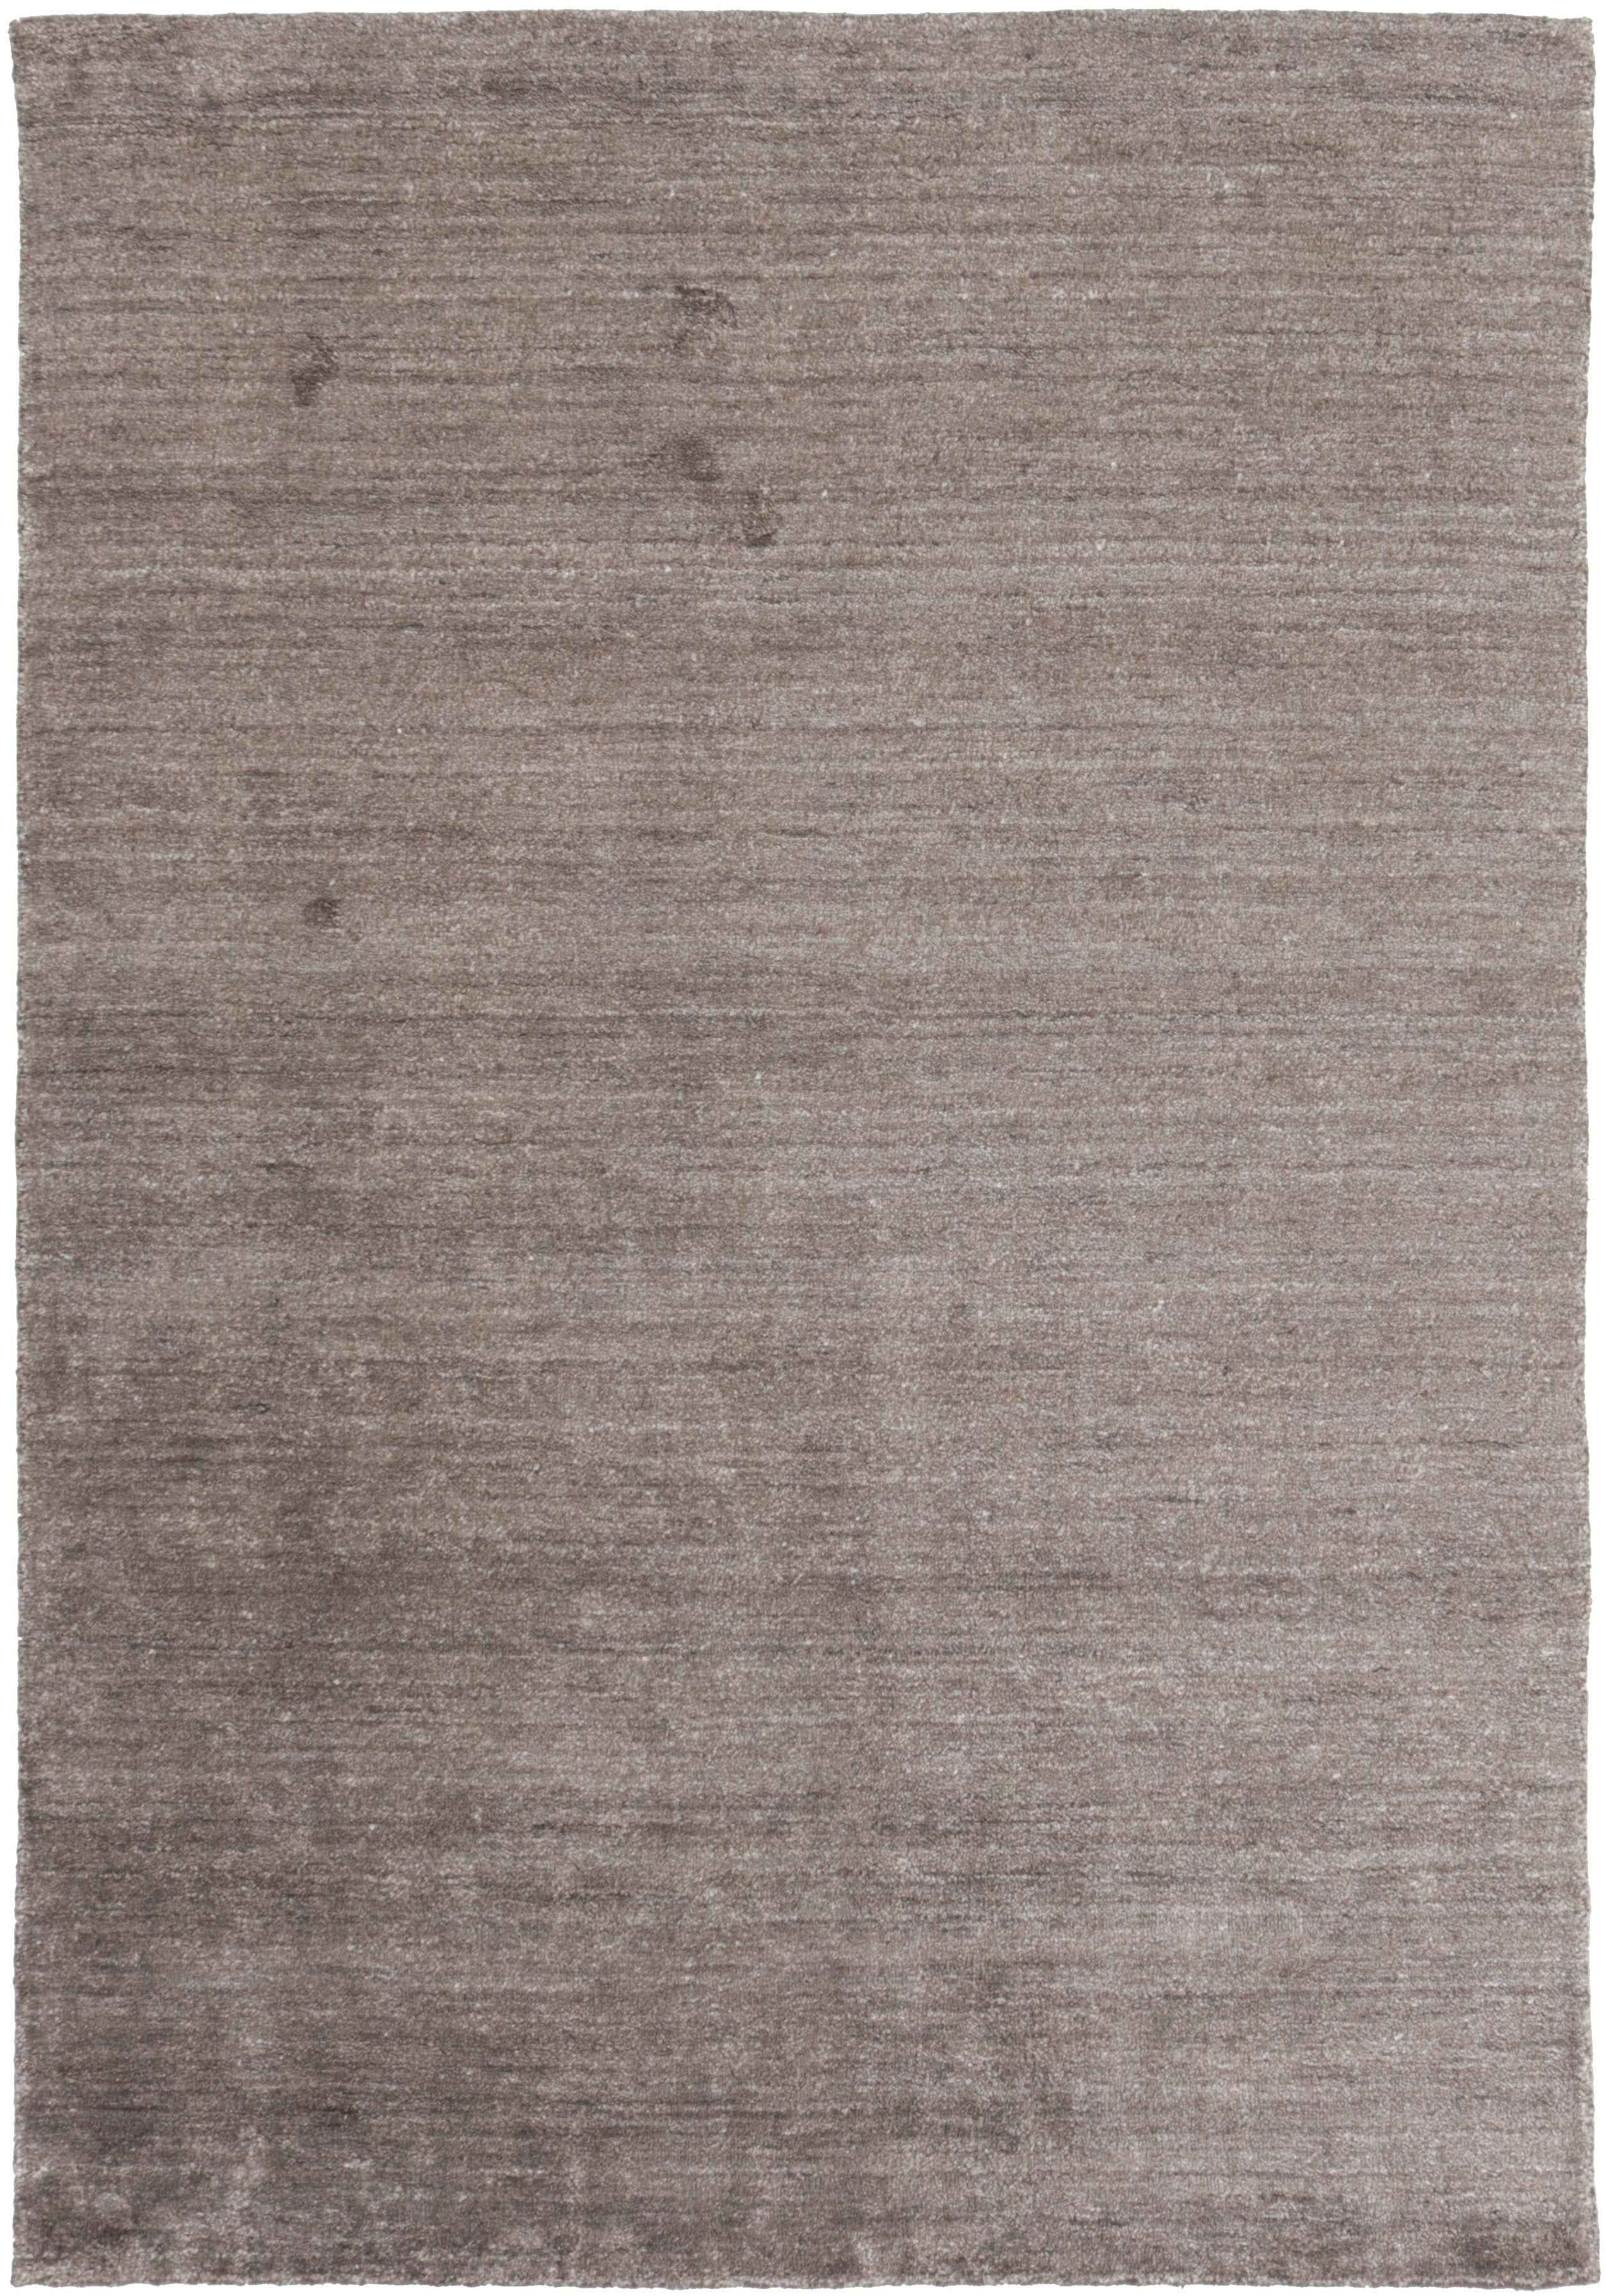 240x170 cm  Indian Viscose Brown Rug-Robusto, Dark Brown